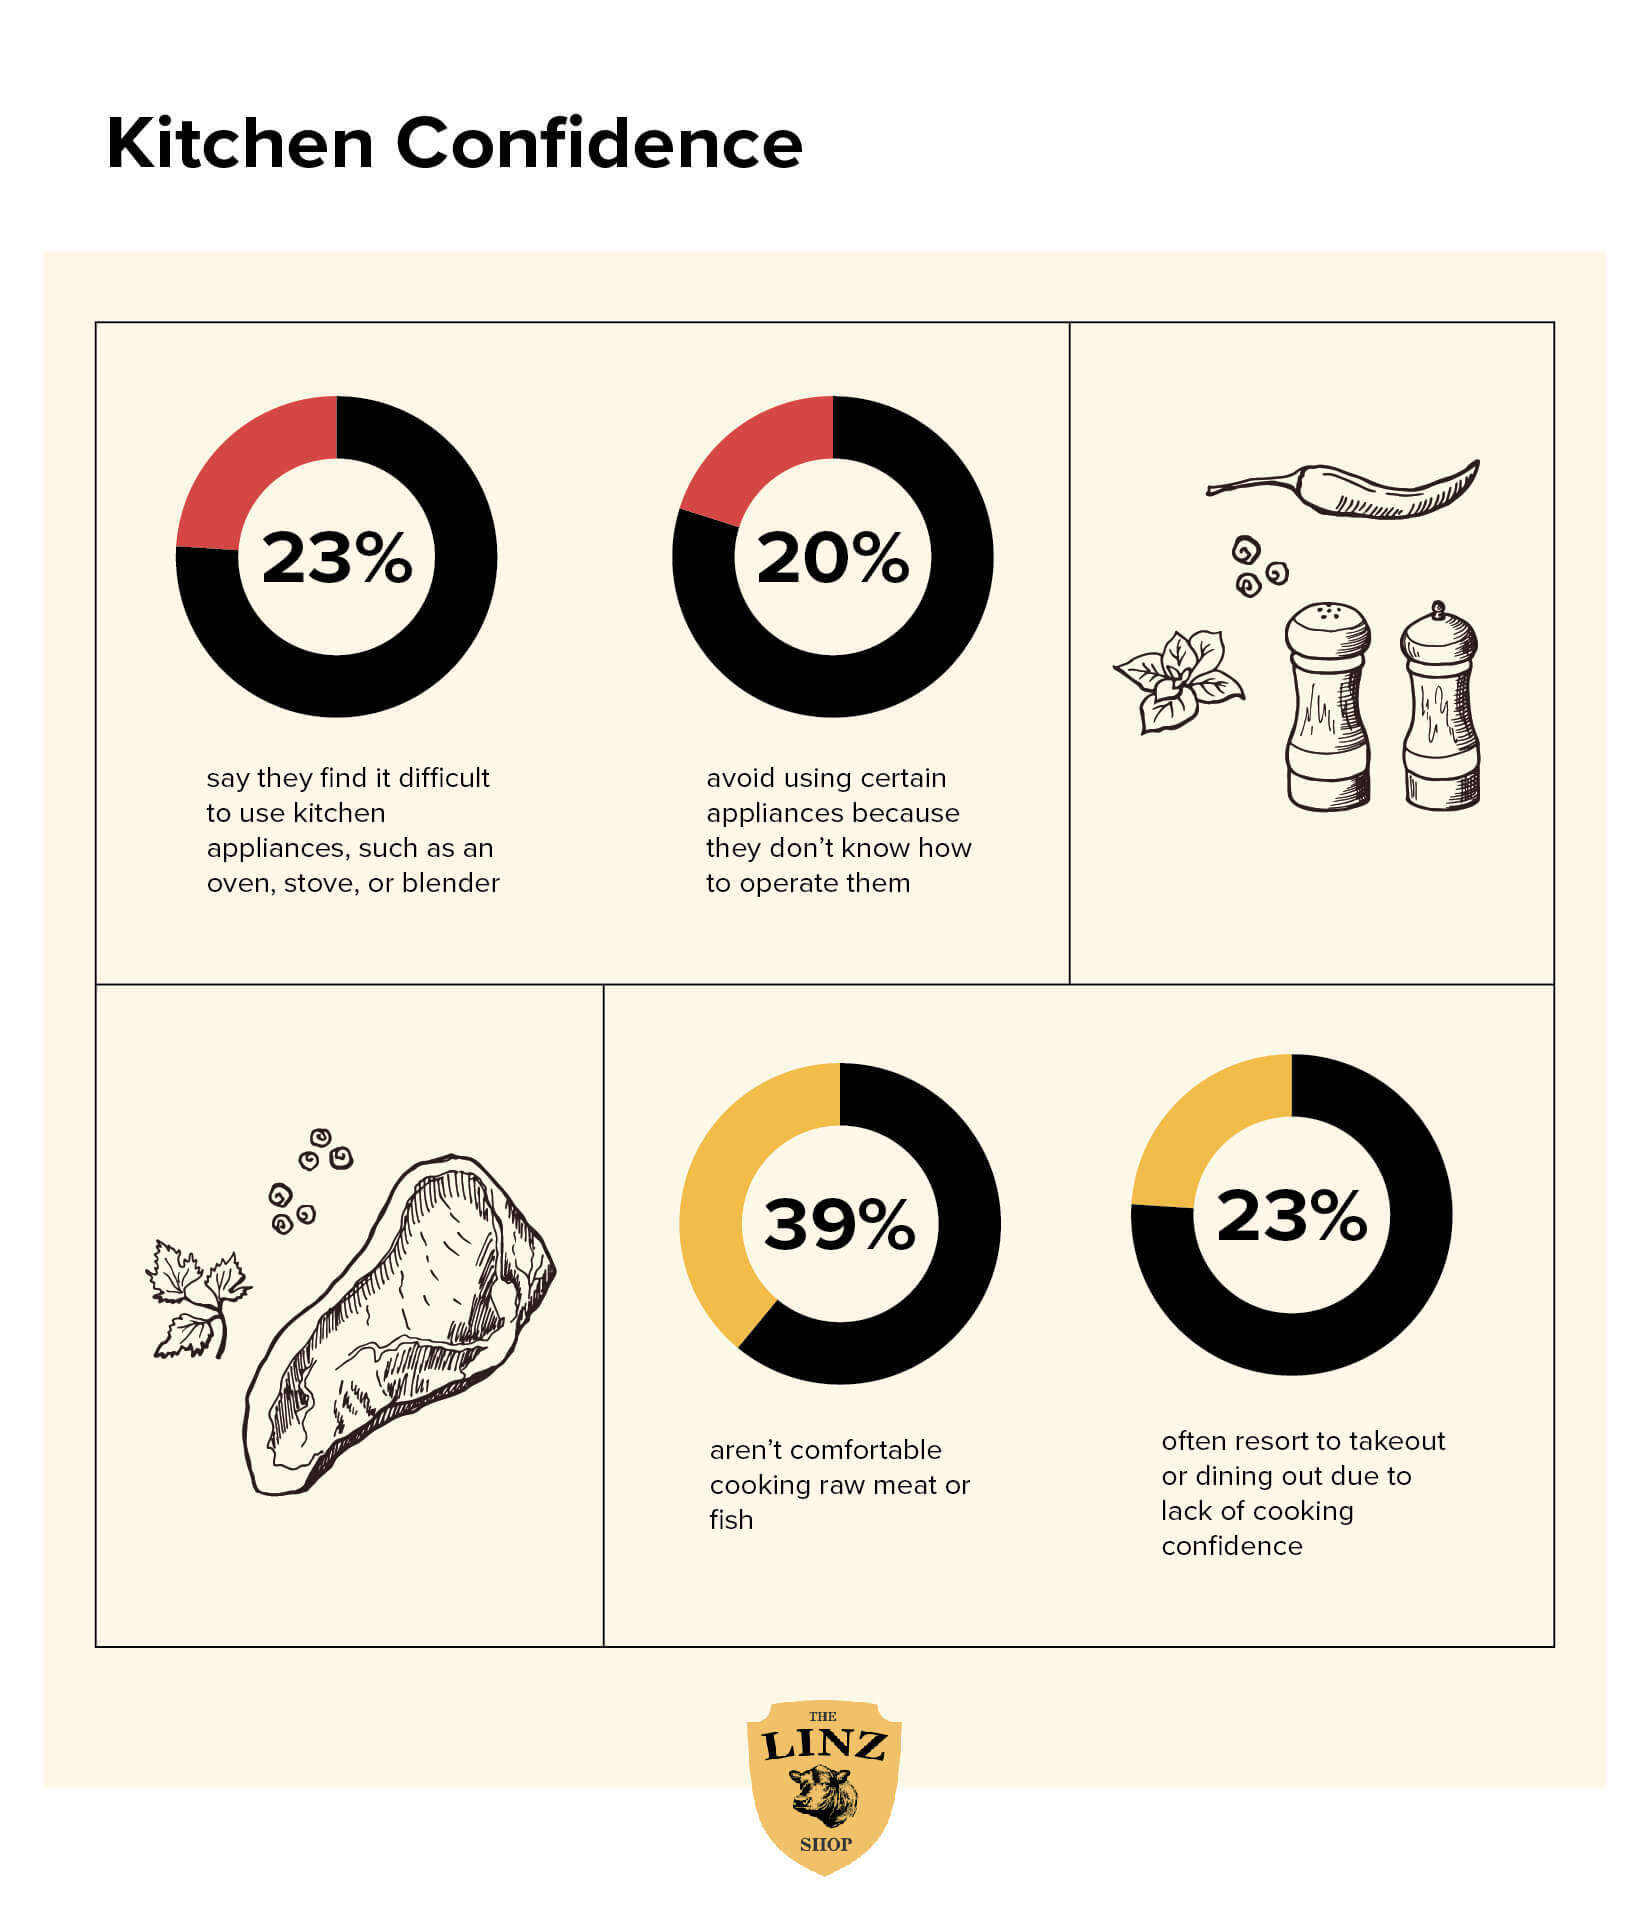 Kitchen confidence